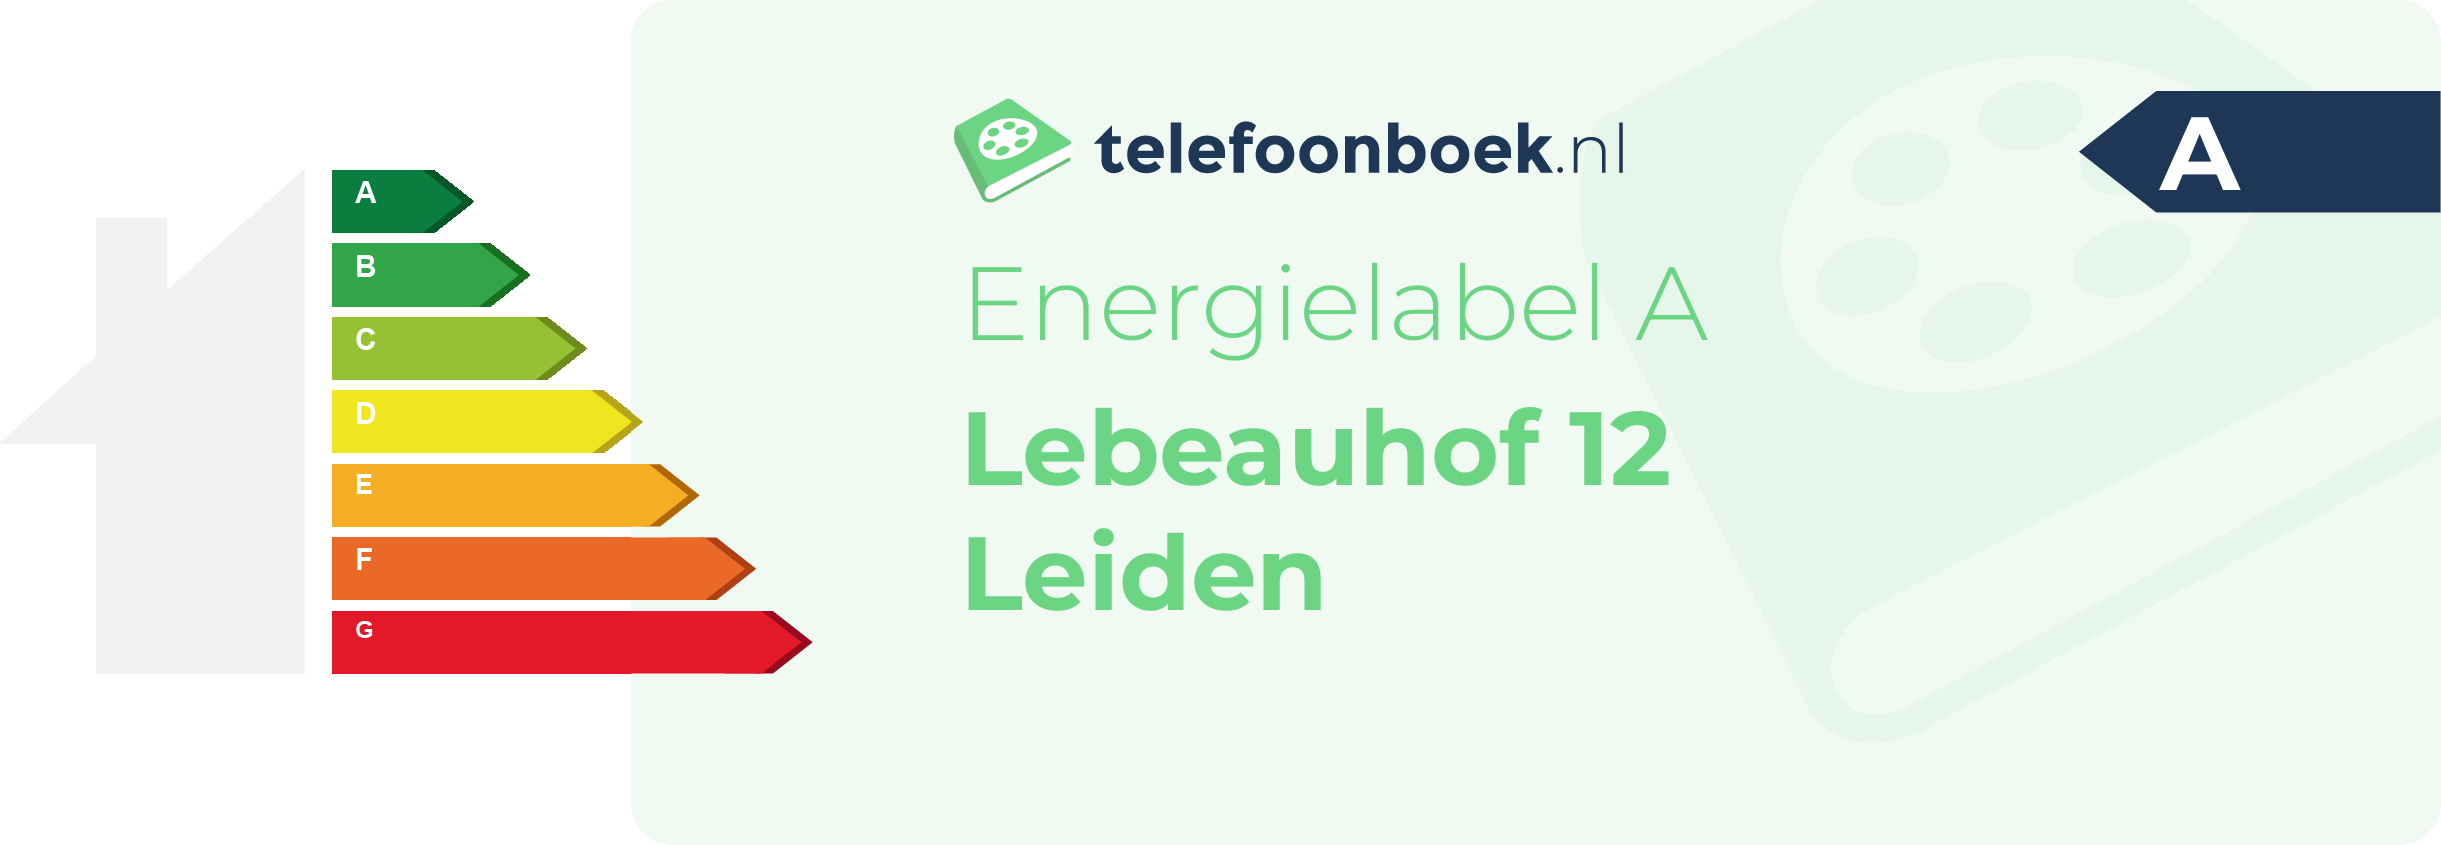 Energielabel Lebeauhof 12 Leiden